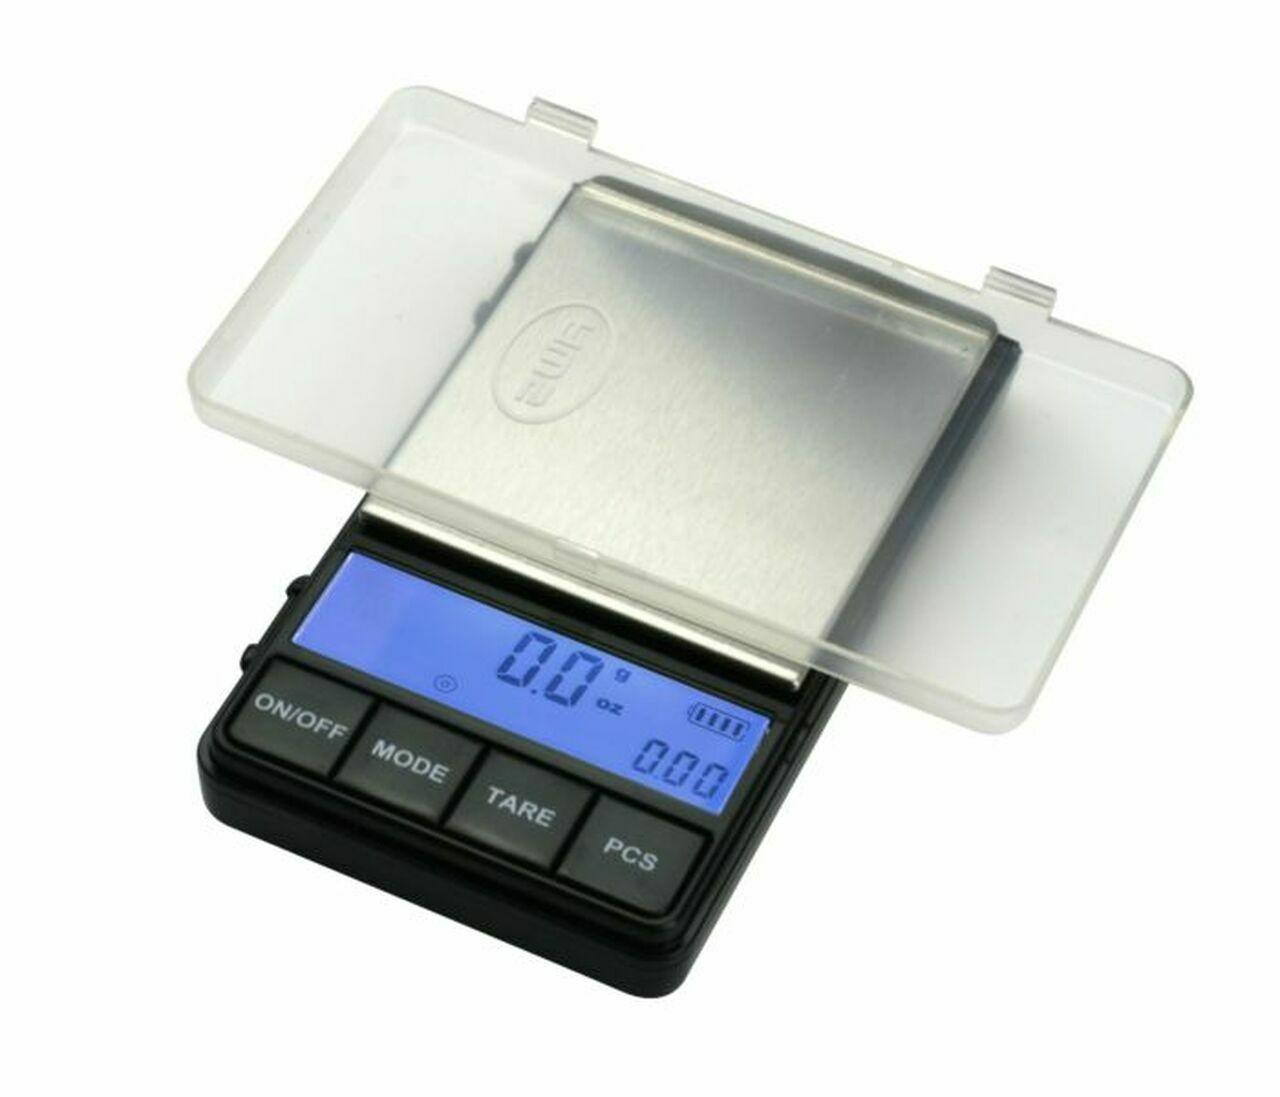 Scales, Pocket Scales, Kitchen Scales & Bathroom Scales